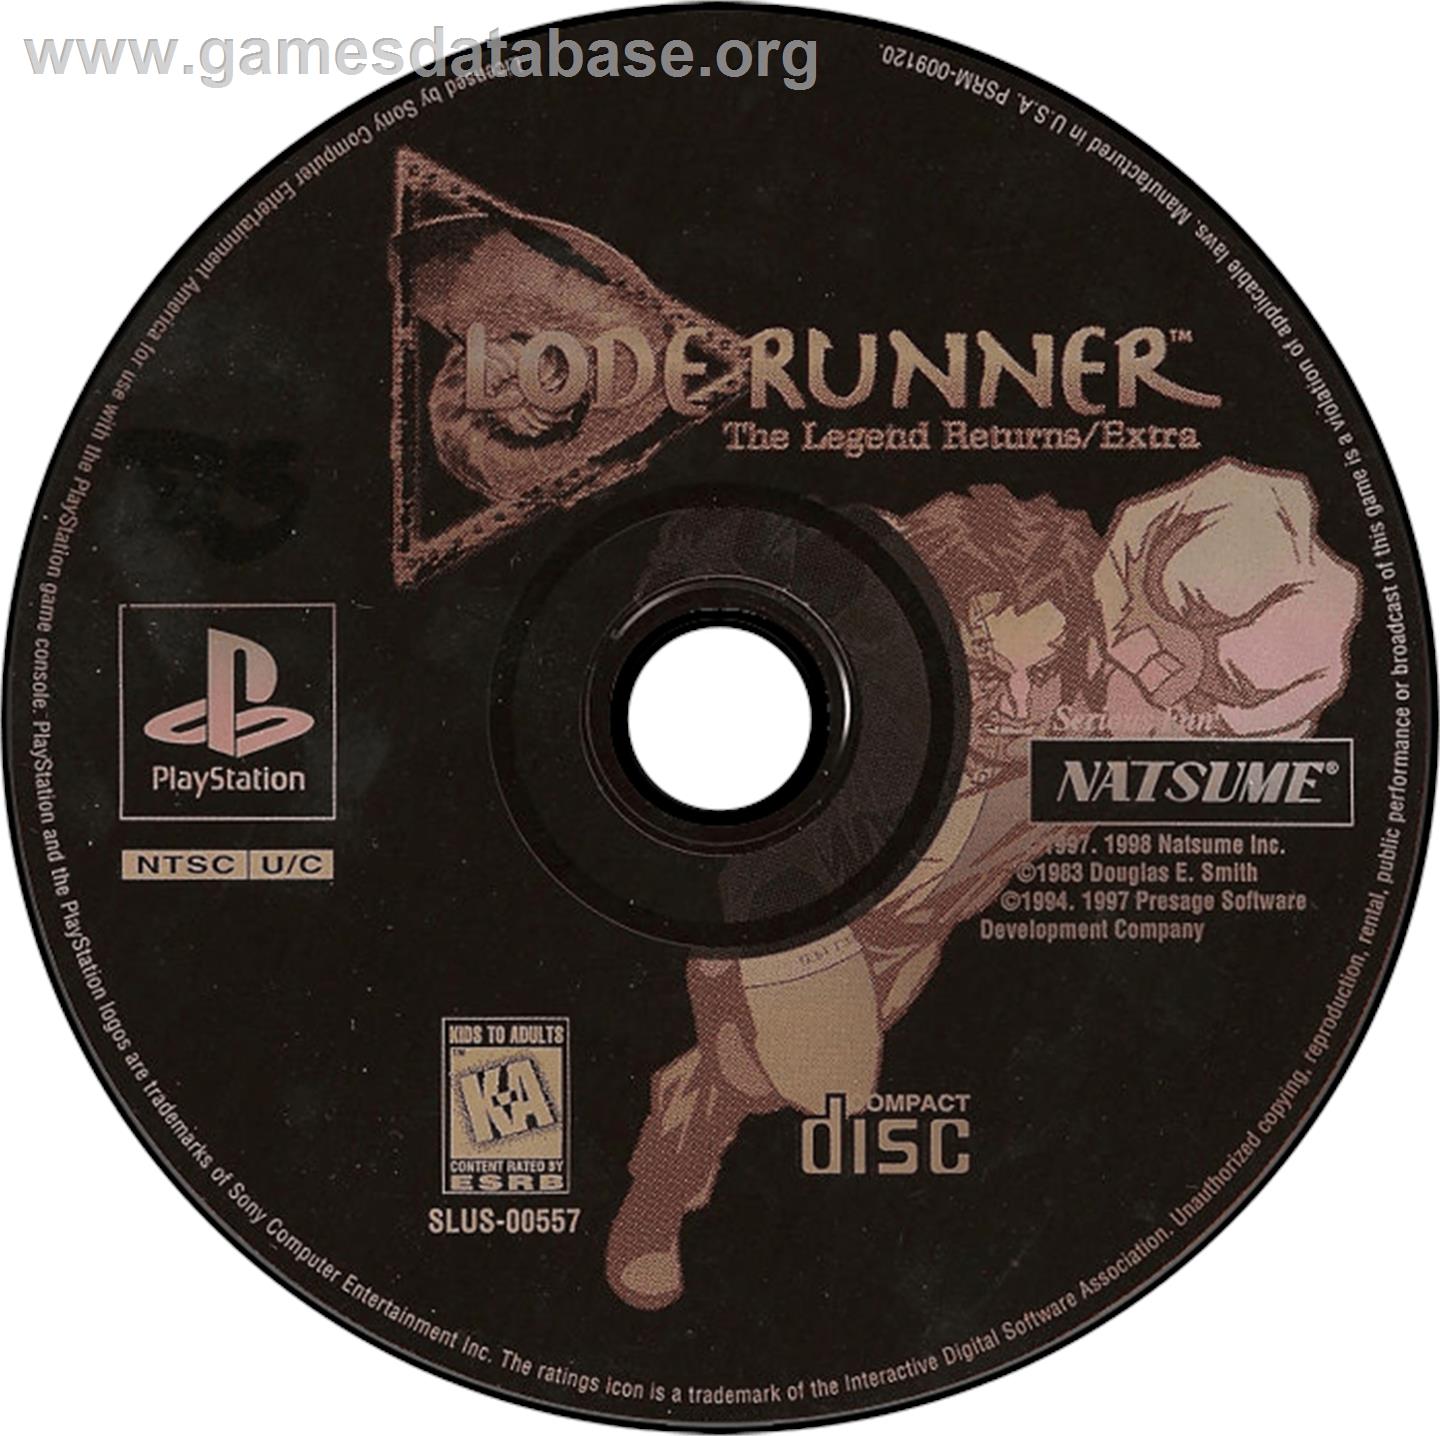 Lode Runner: The Legend Returns - Sony Playstation - Artwork - Disc